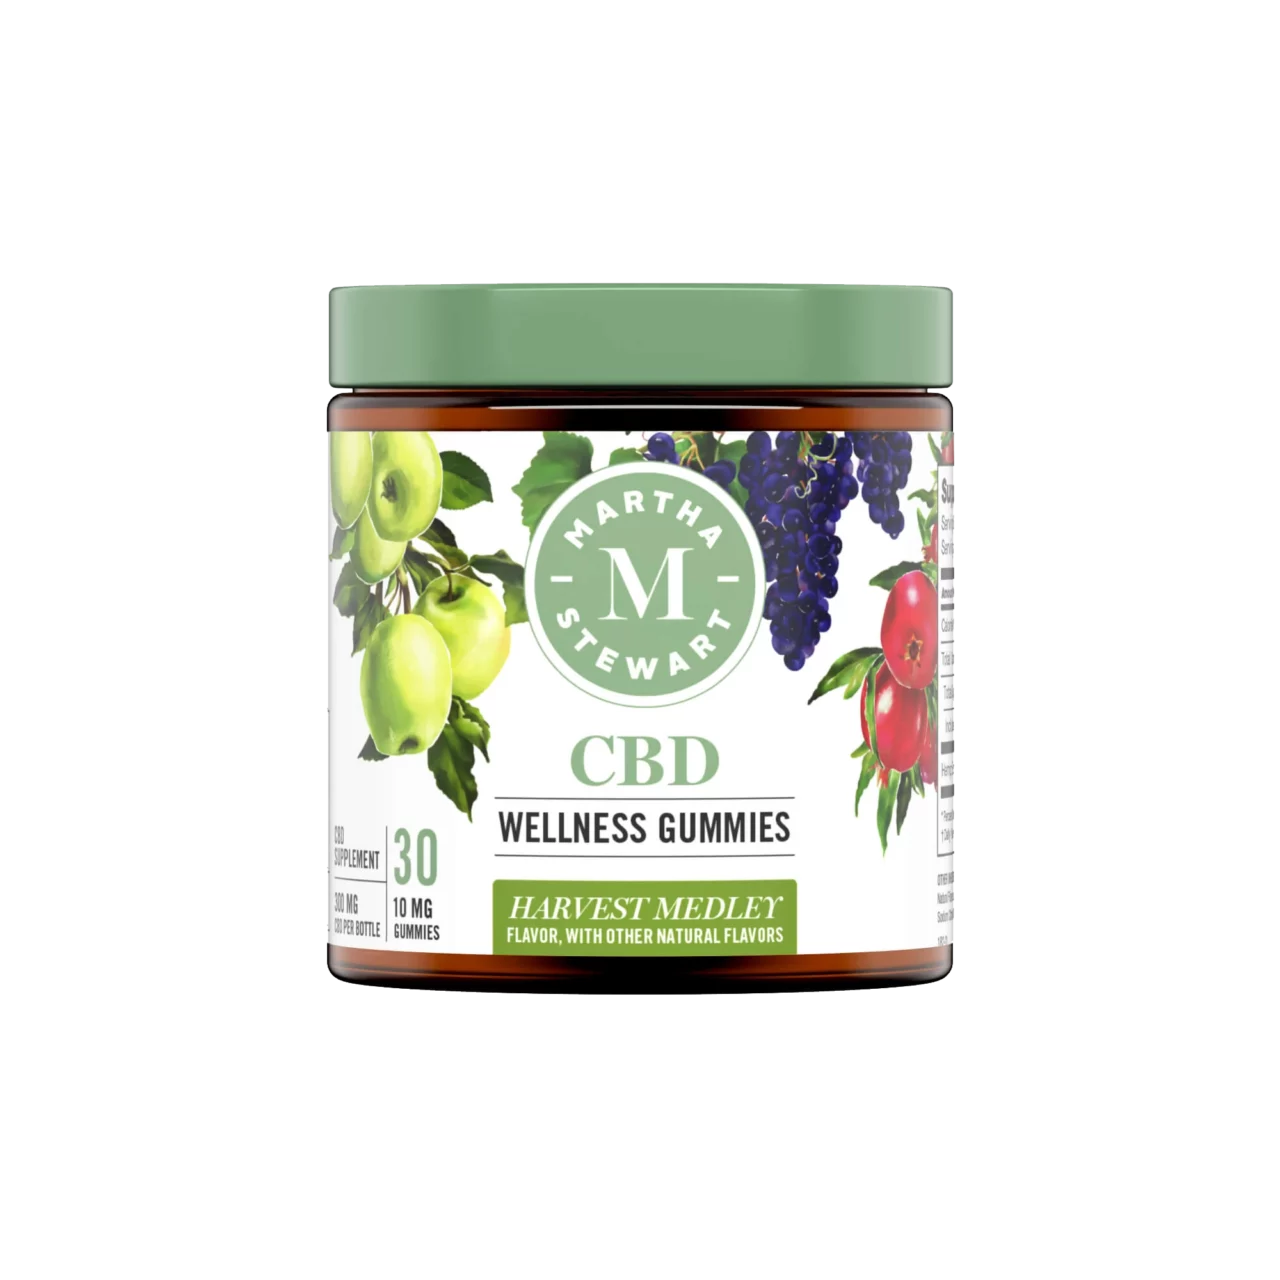 Martha Stewart CBD, Harvest Medley Wellness Gummies, Isolate THC-Free, 30ct, 300mg CBD 1